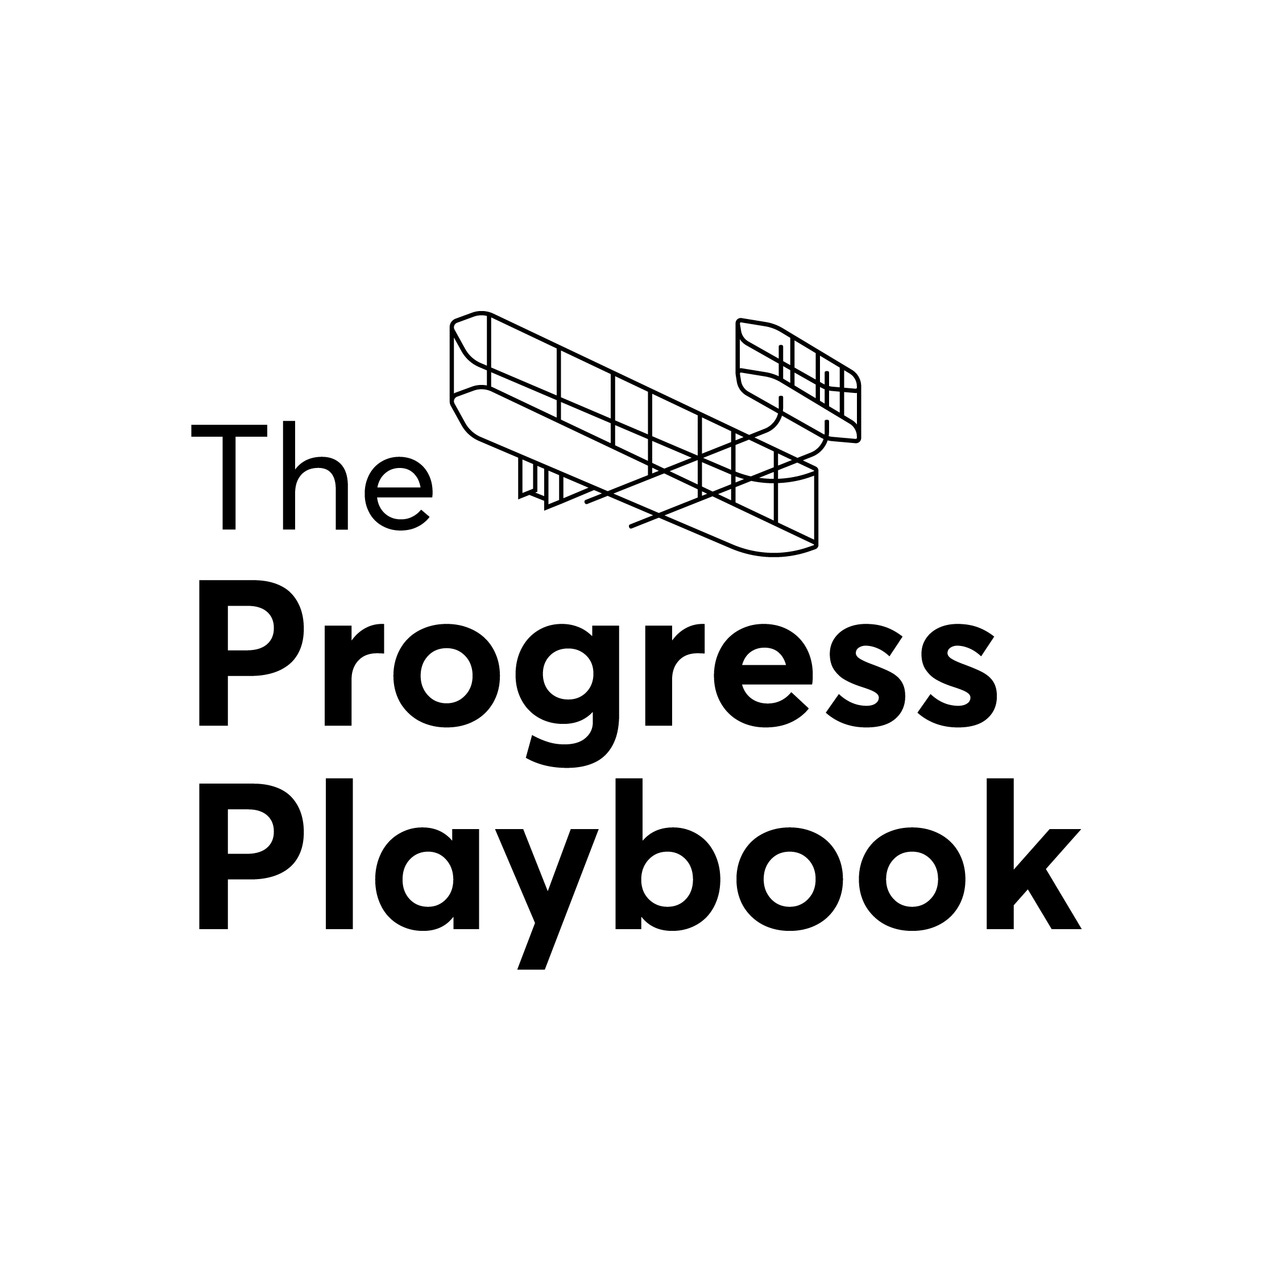 The Progress Playbook